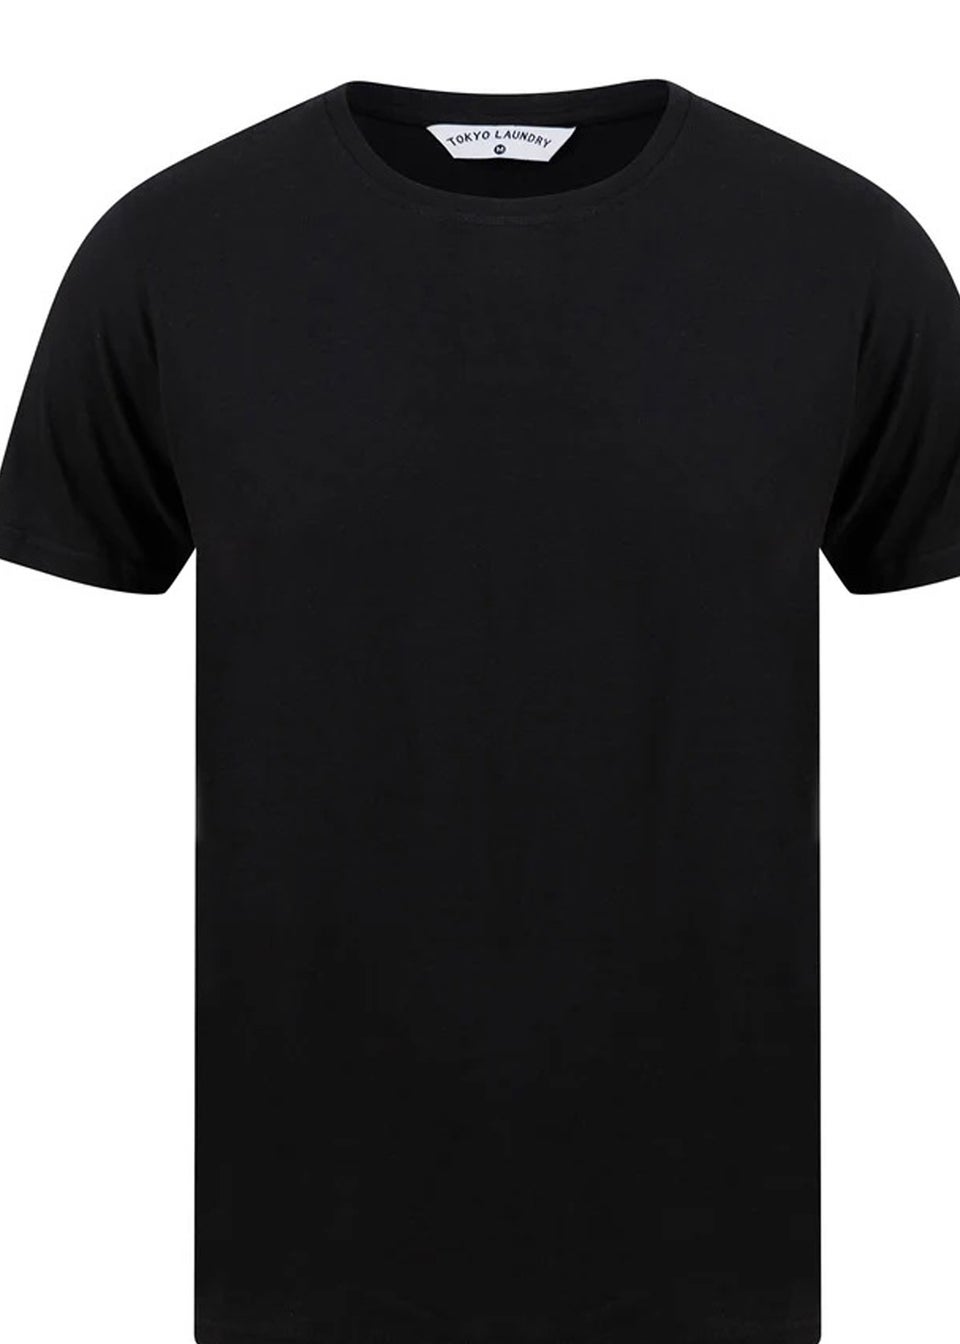 Tokyo Laundry Black Cotton 5-Pack Short Sleeve T-Shirts